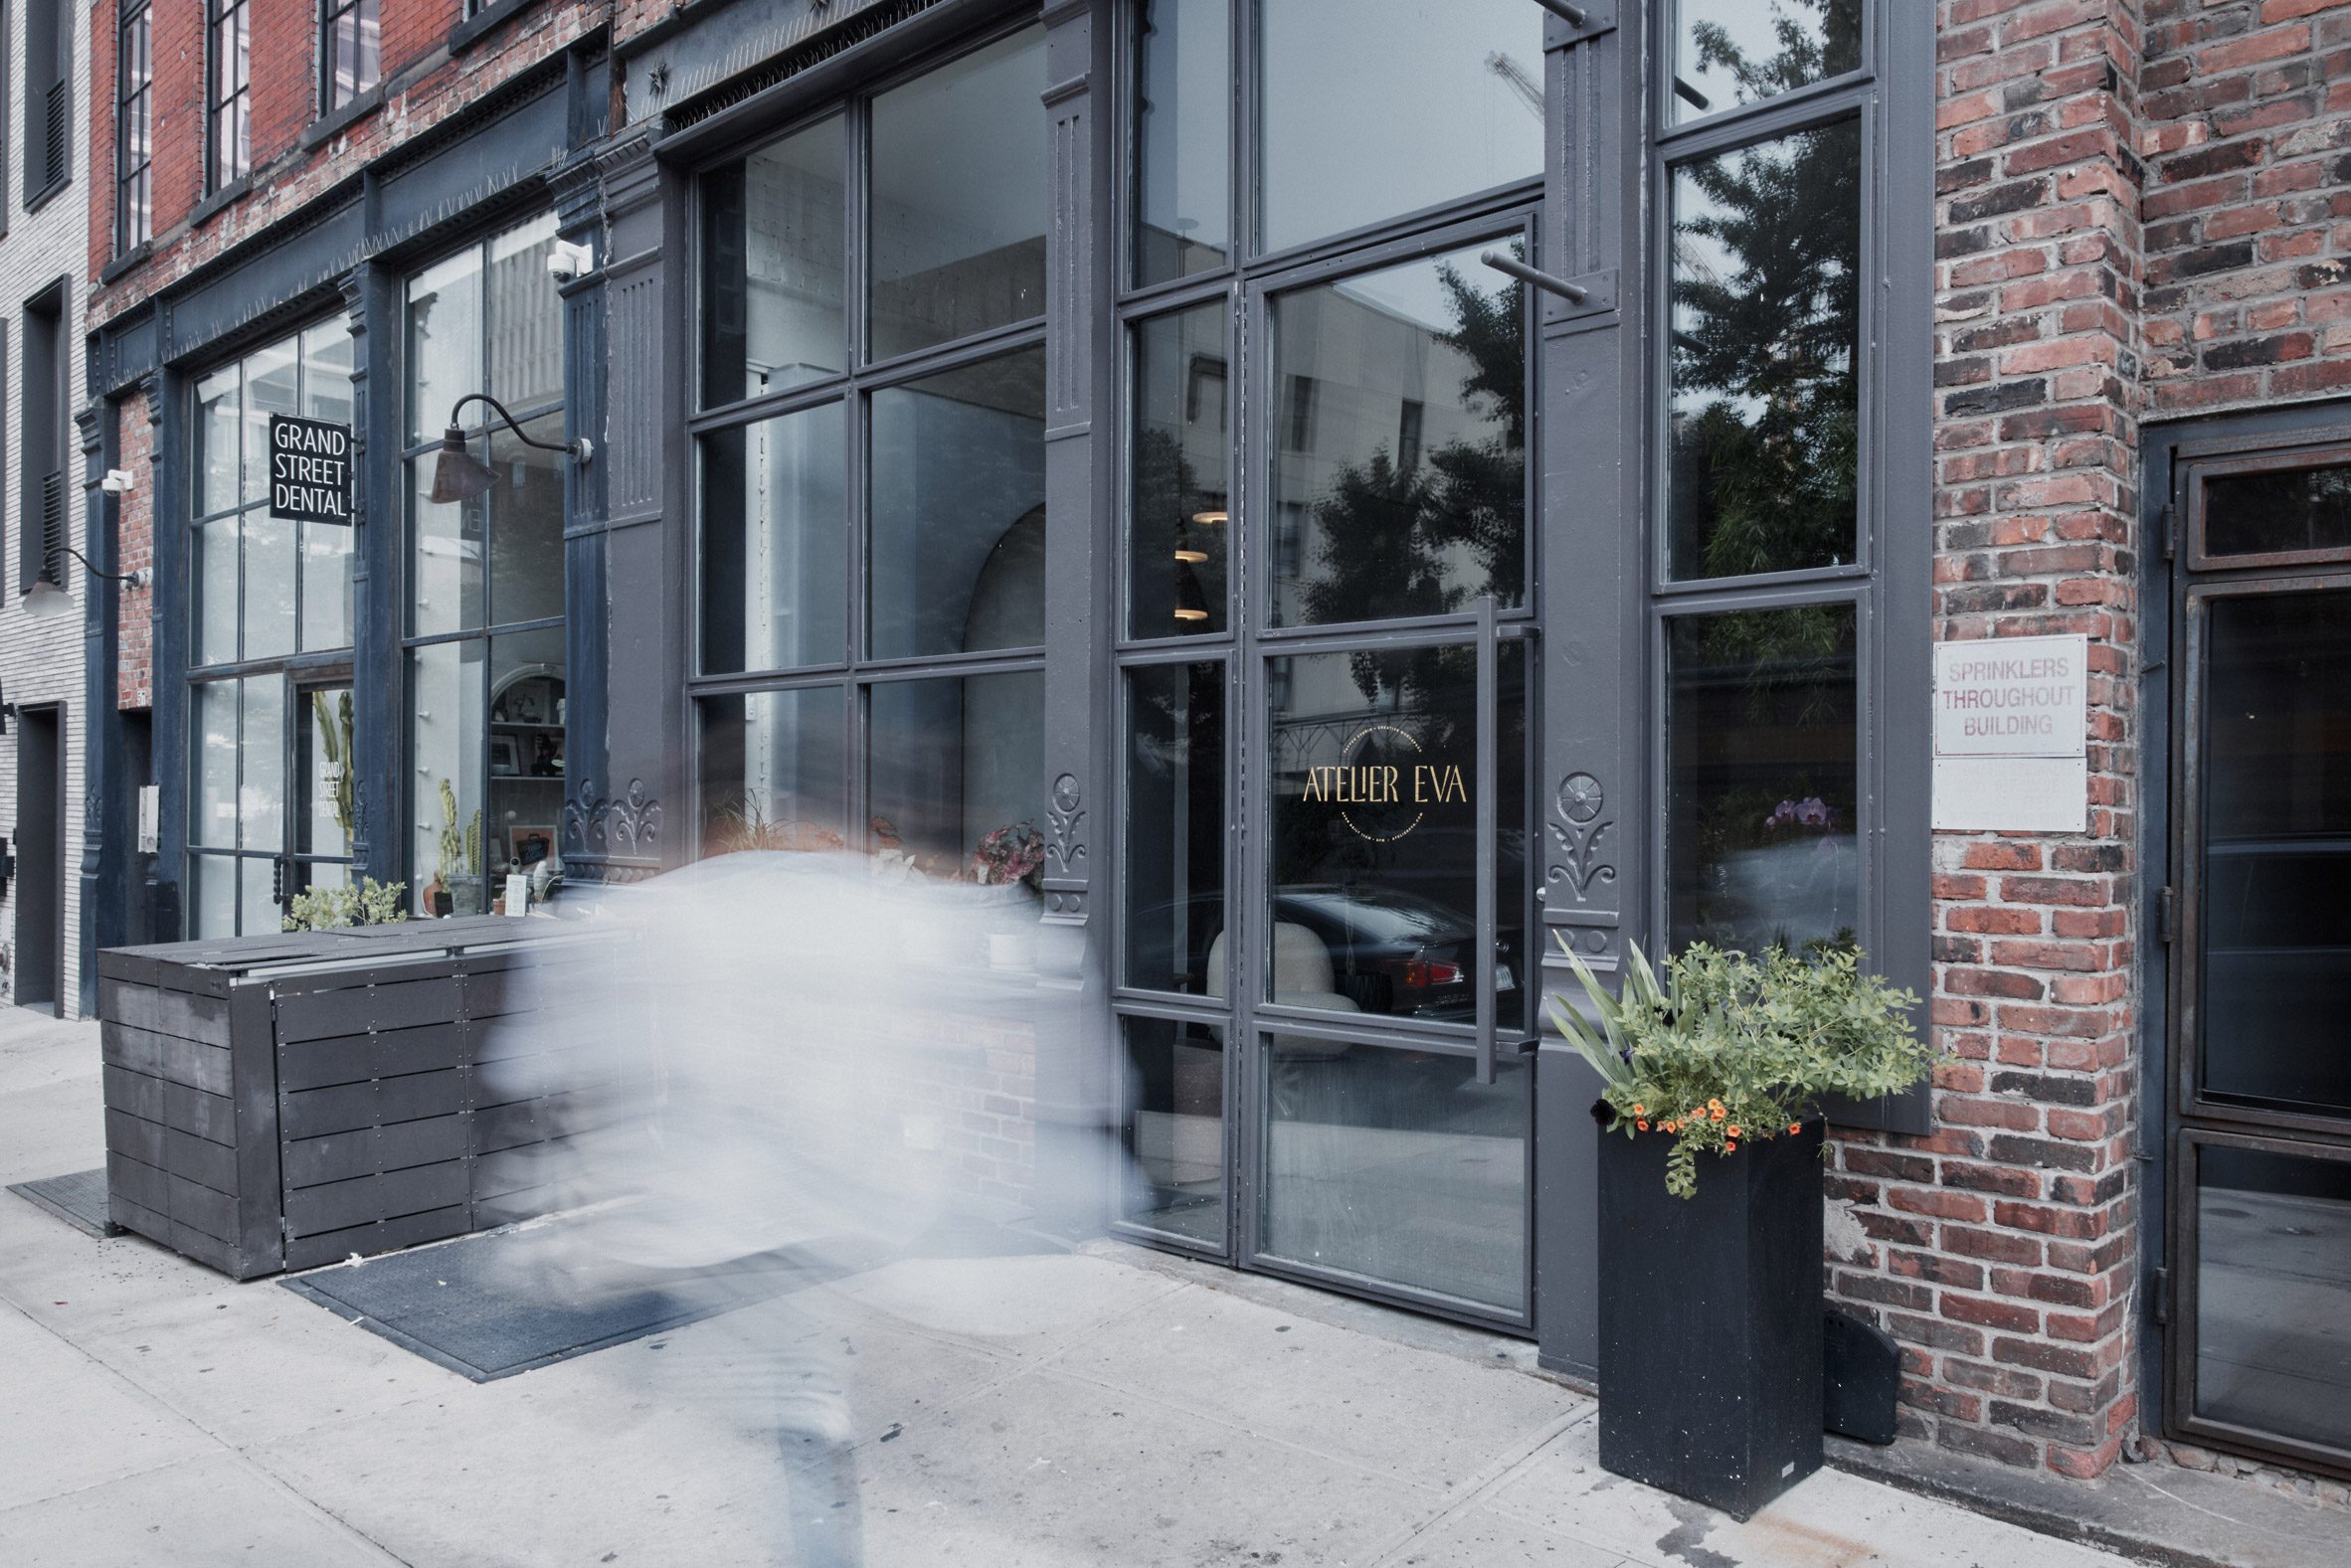 Exterior view of Atelier Eva studio on Grand Street, Brooklyn